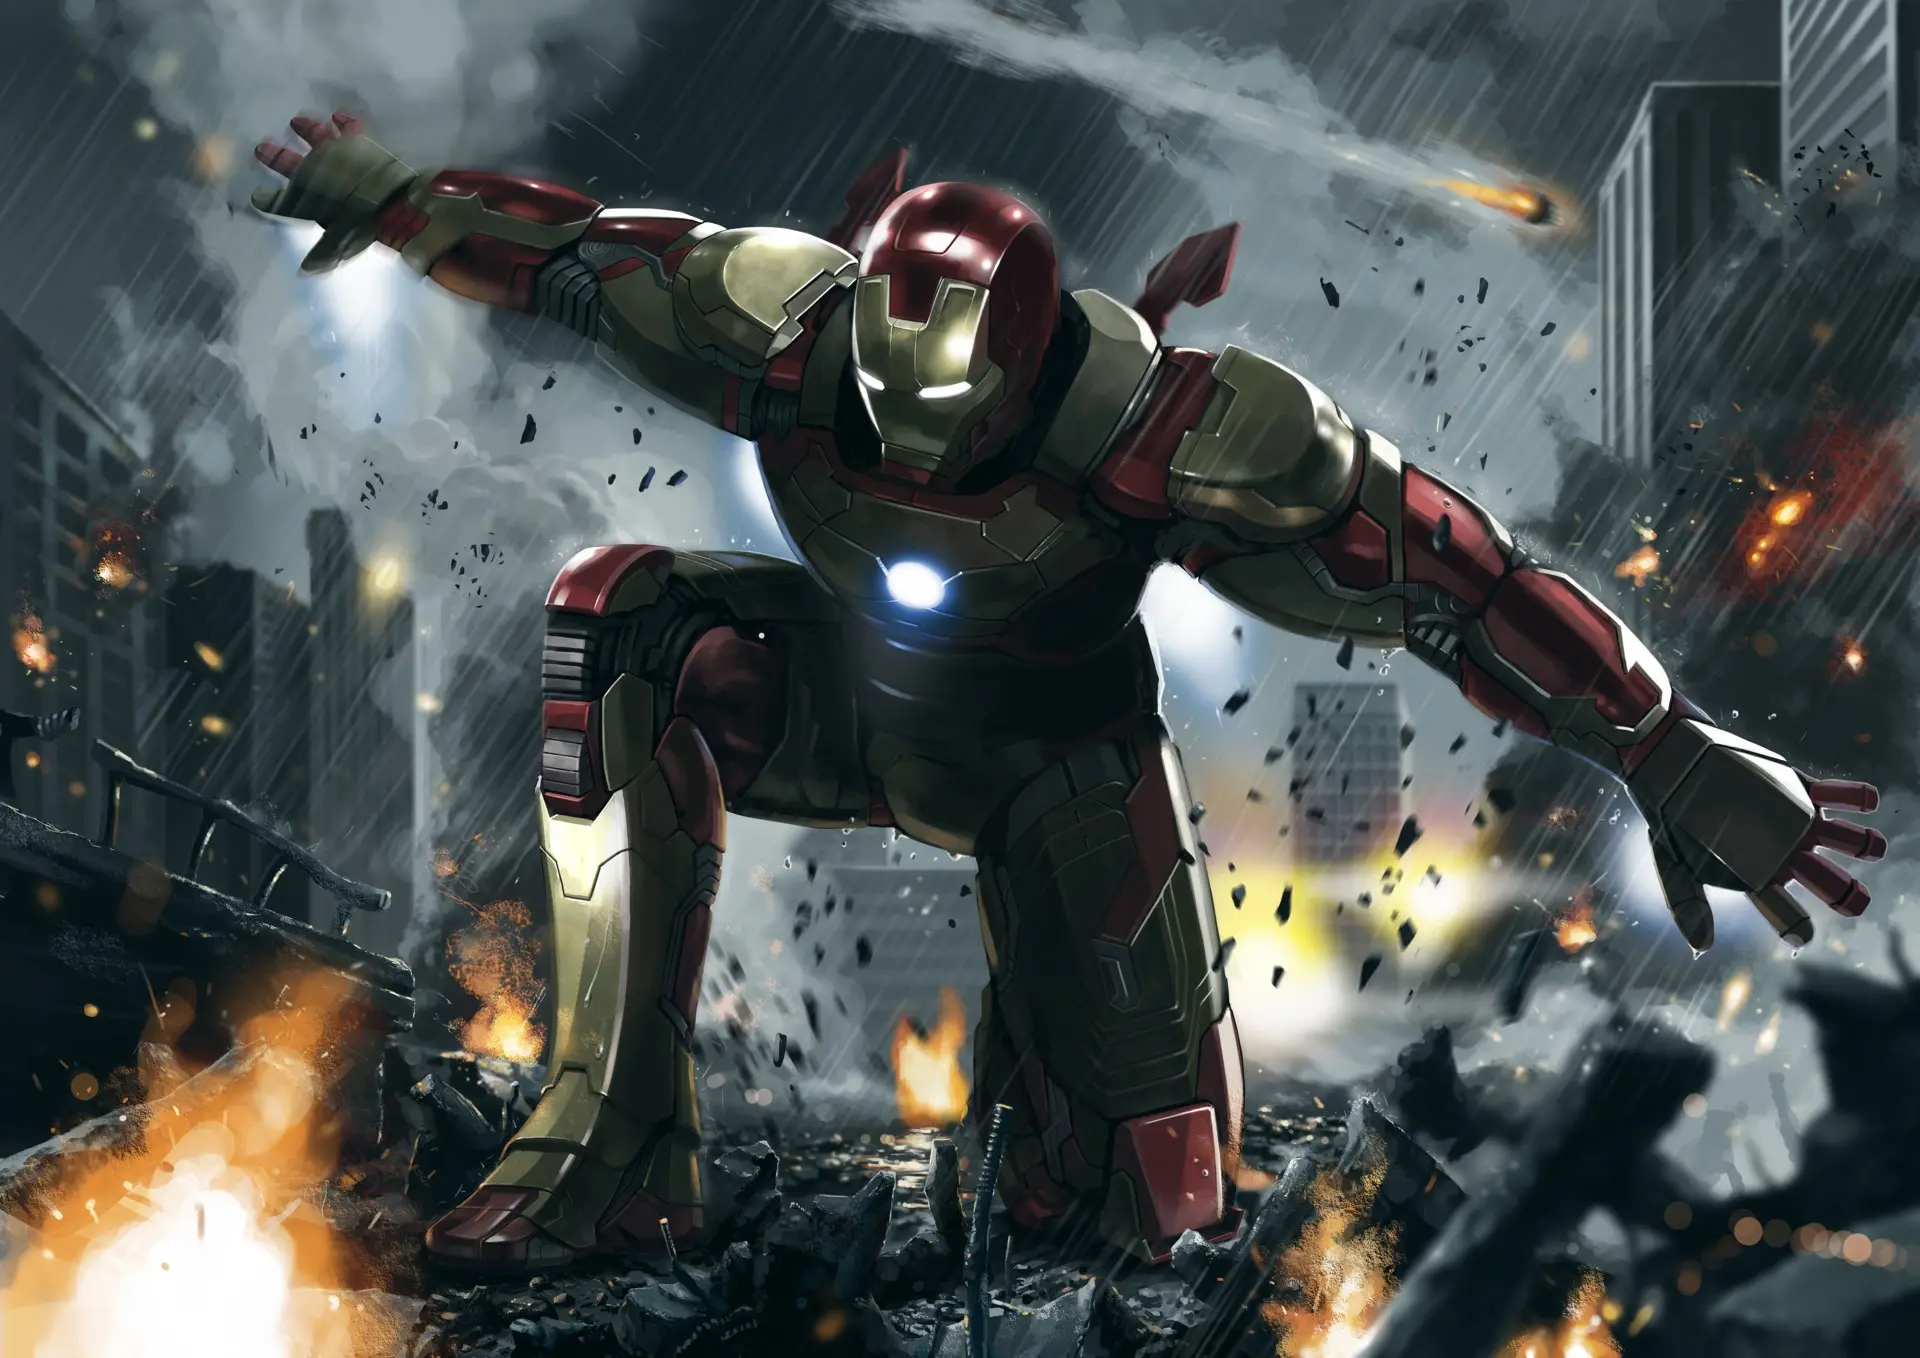 30 wallpaper Iron Man terindah full HD, keren banget